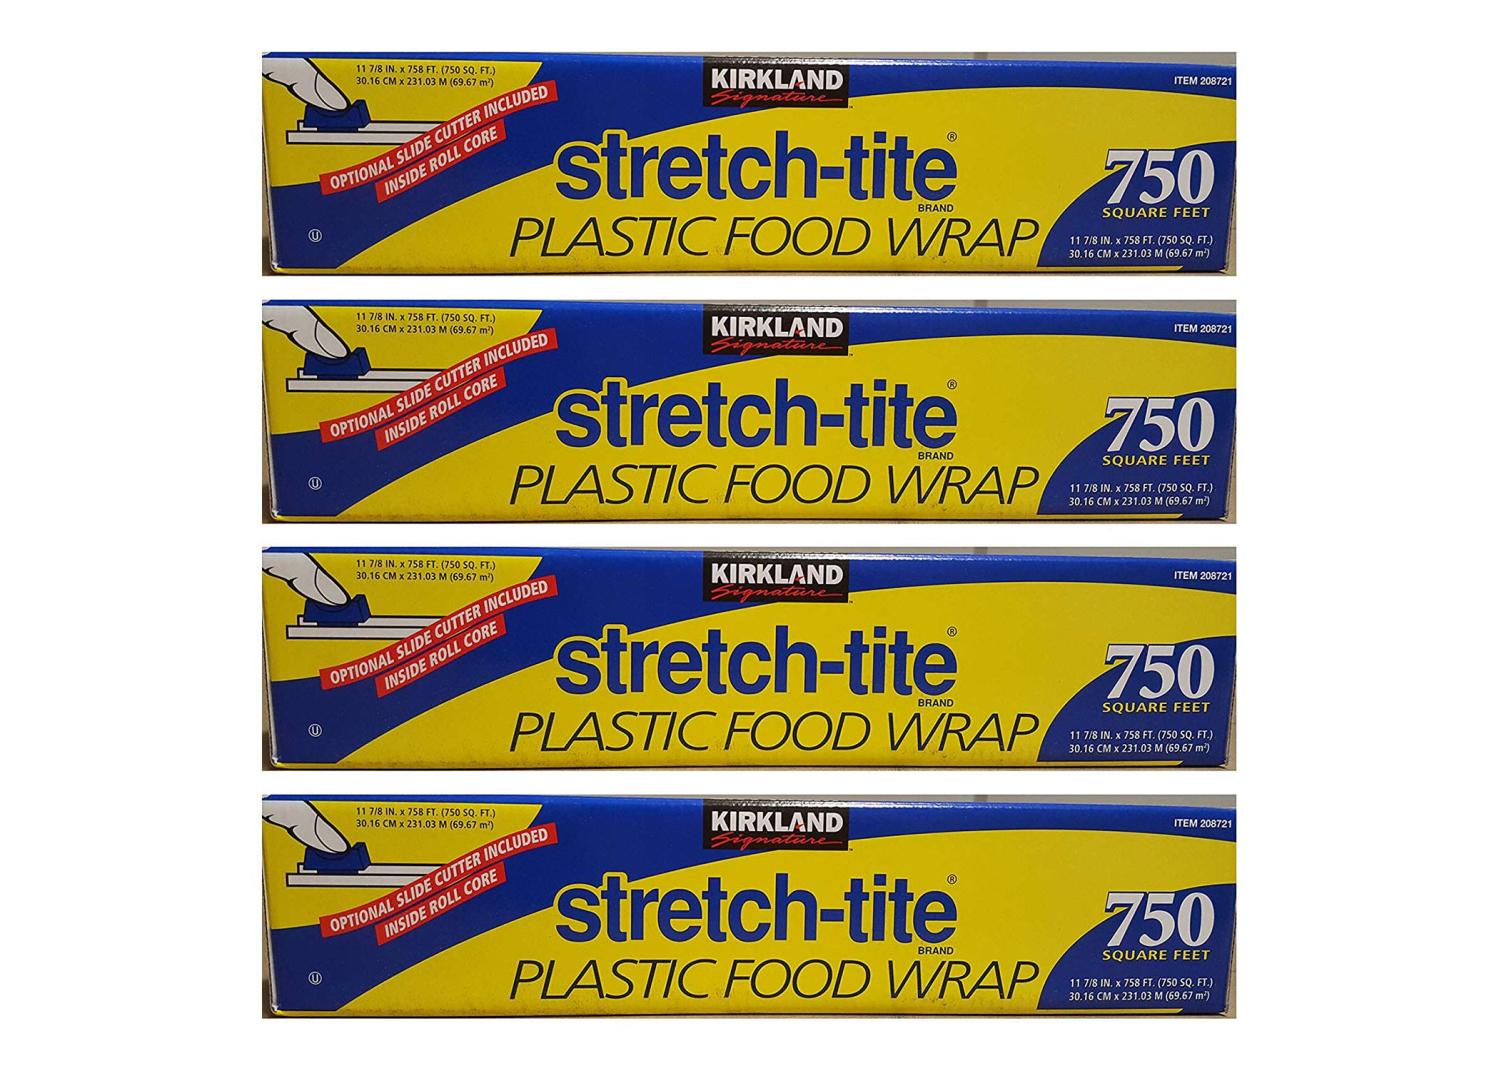 Kirkland Stretch-Tite Plastic Wrap With Slide Cutter, 11 7/8 x